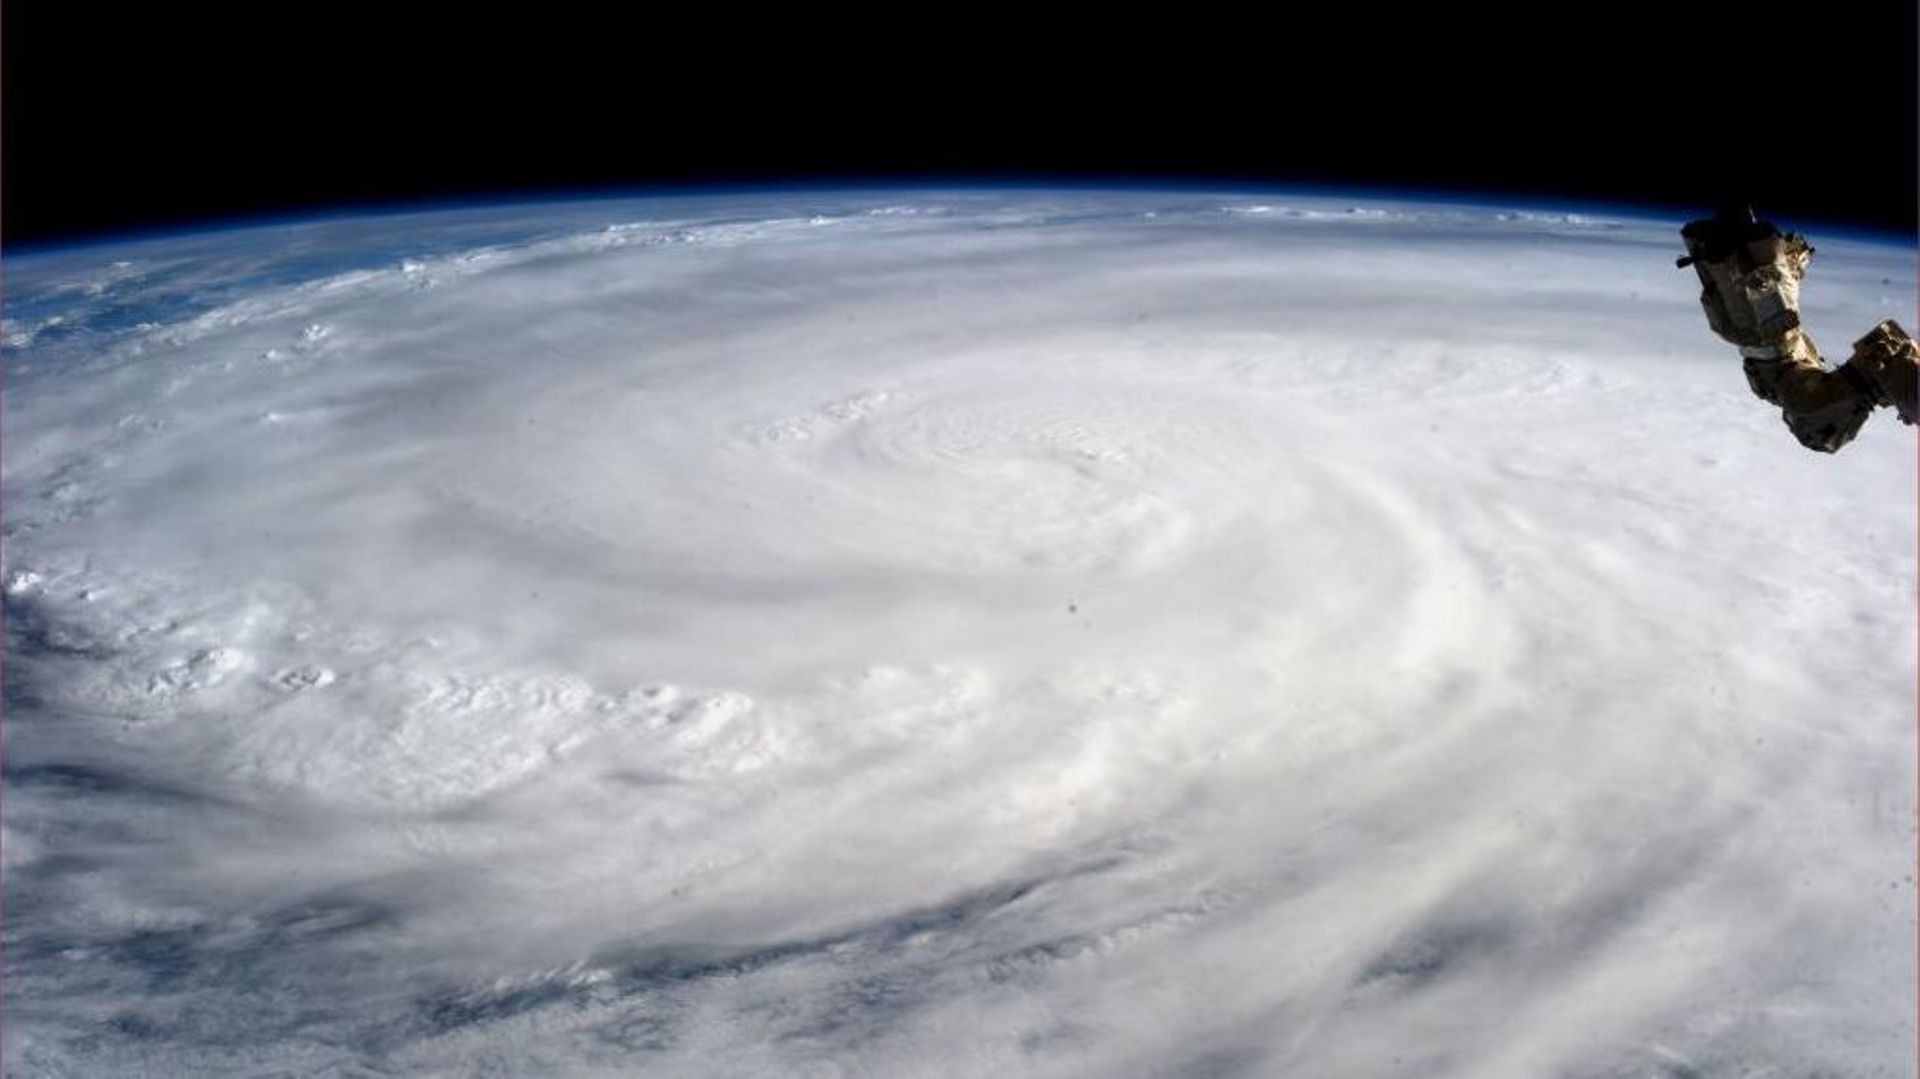 Haiyan, affaibli, frappe le Vietnam puis la Chine